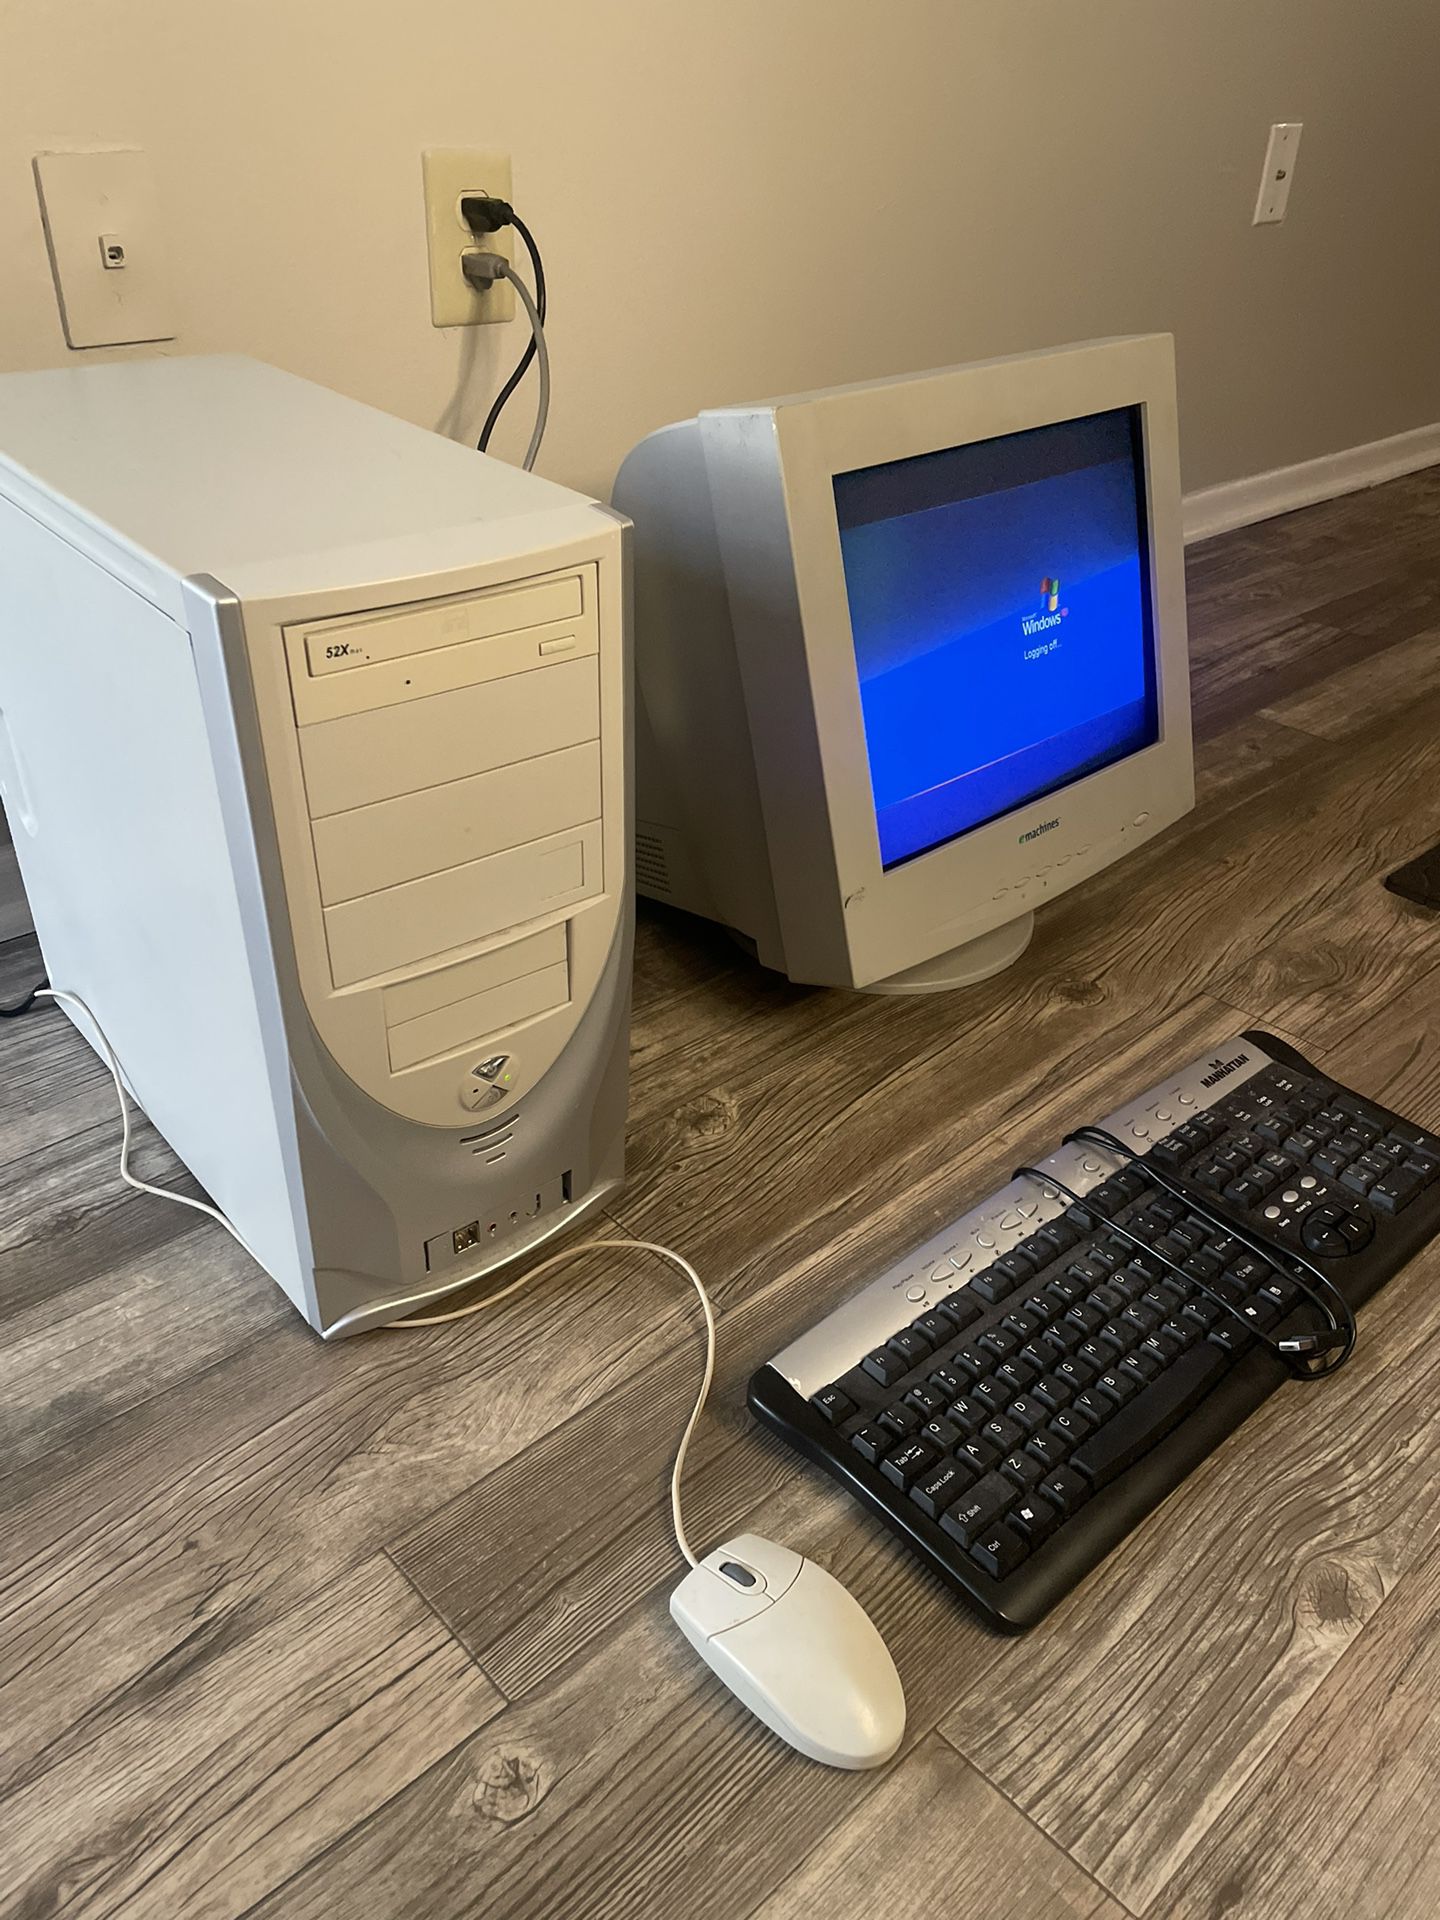 Windows XP Computer and Monitor